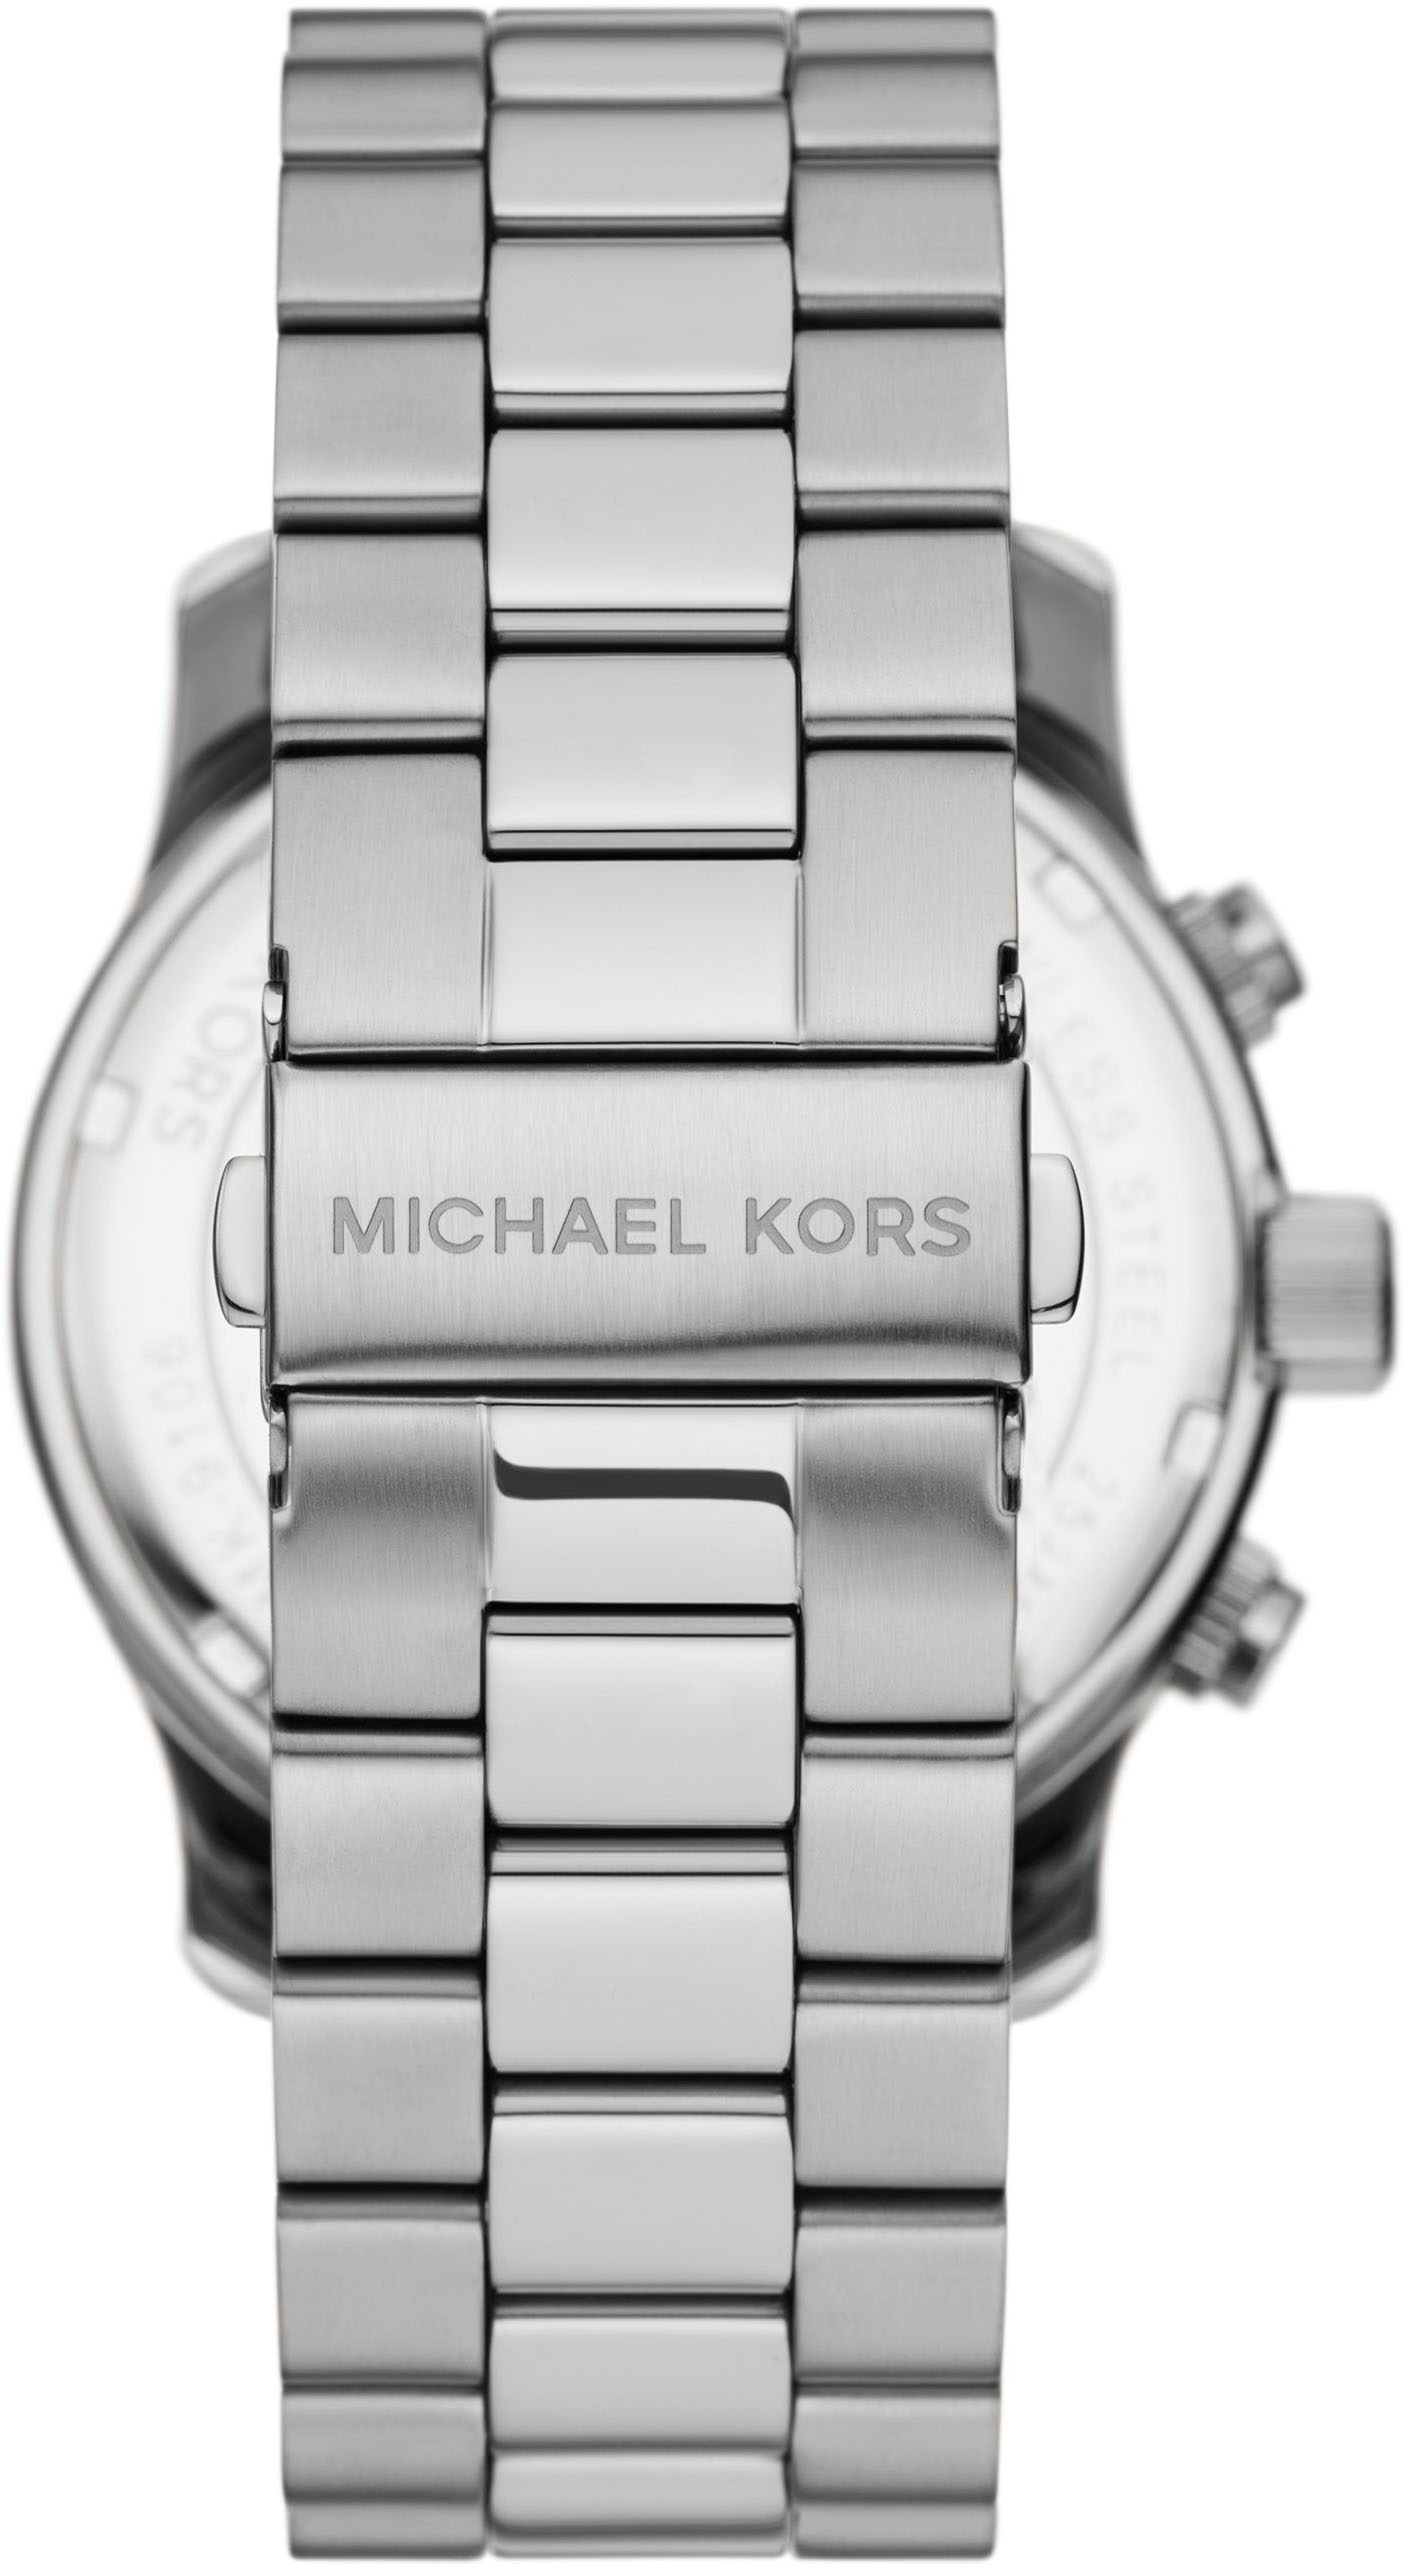 MICHAEL KORS Chronograph »RUNWAY, MK9105« online bestellen | BAUR